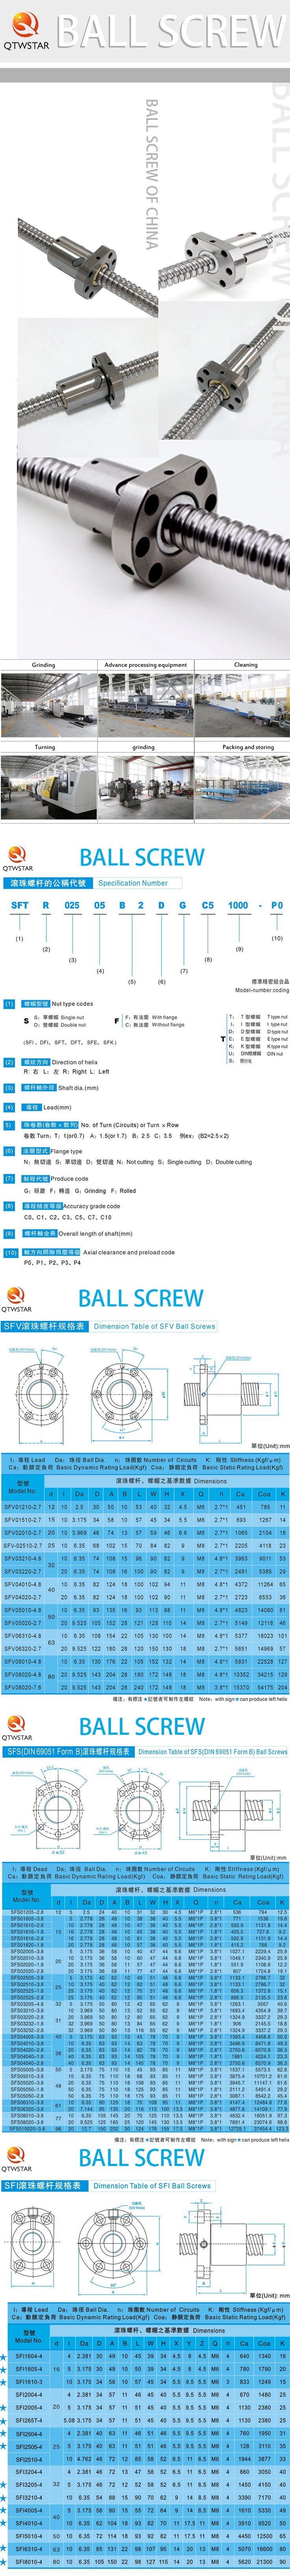 Solomon Islands Ball Screw and Ball Screw, Ball Screw, Shenzhen Ball Screw